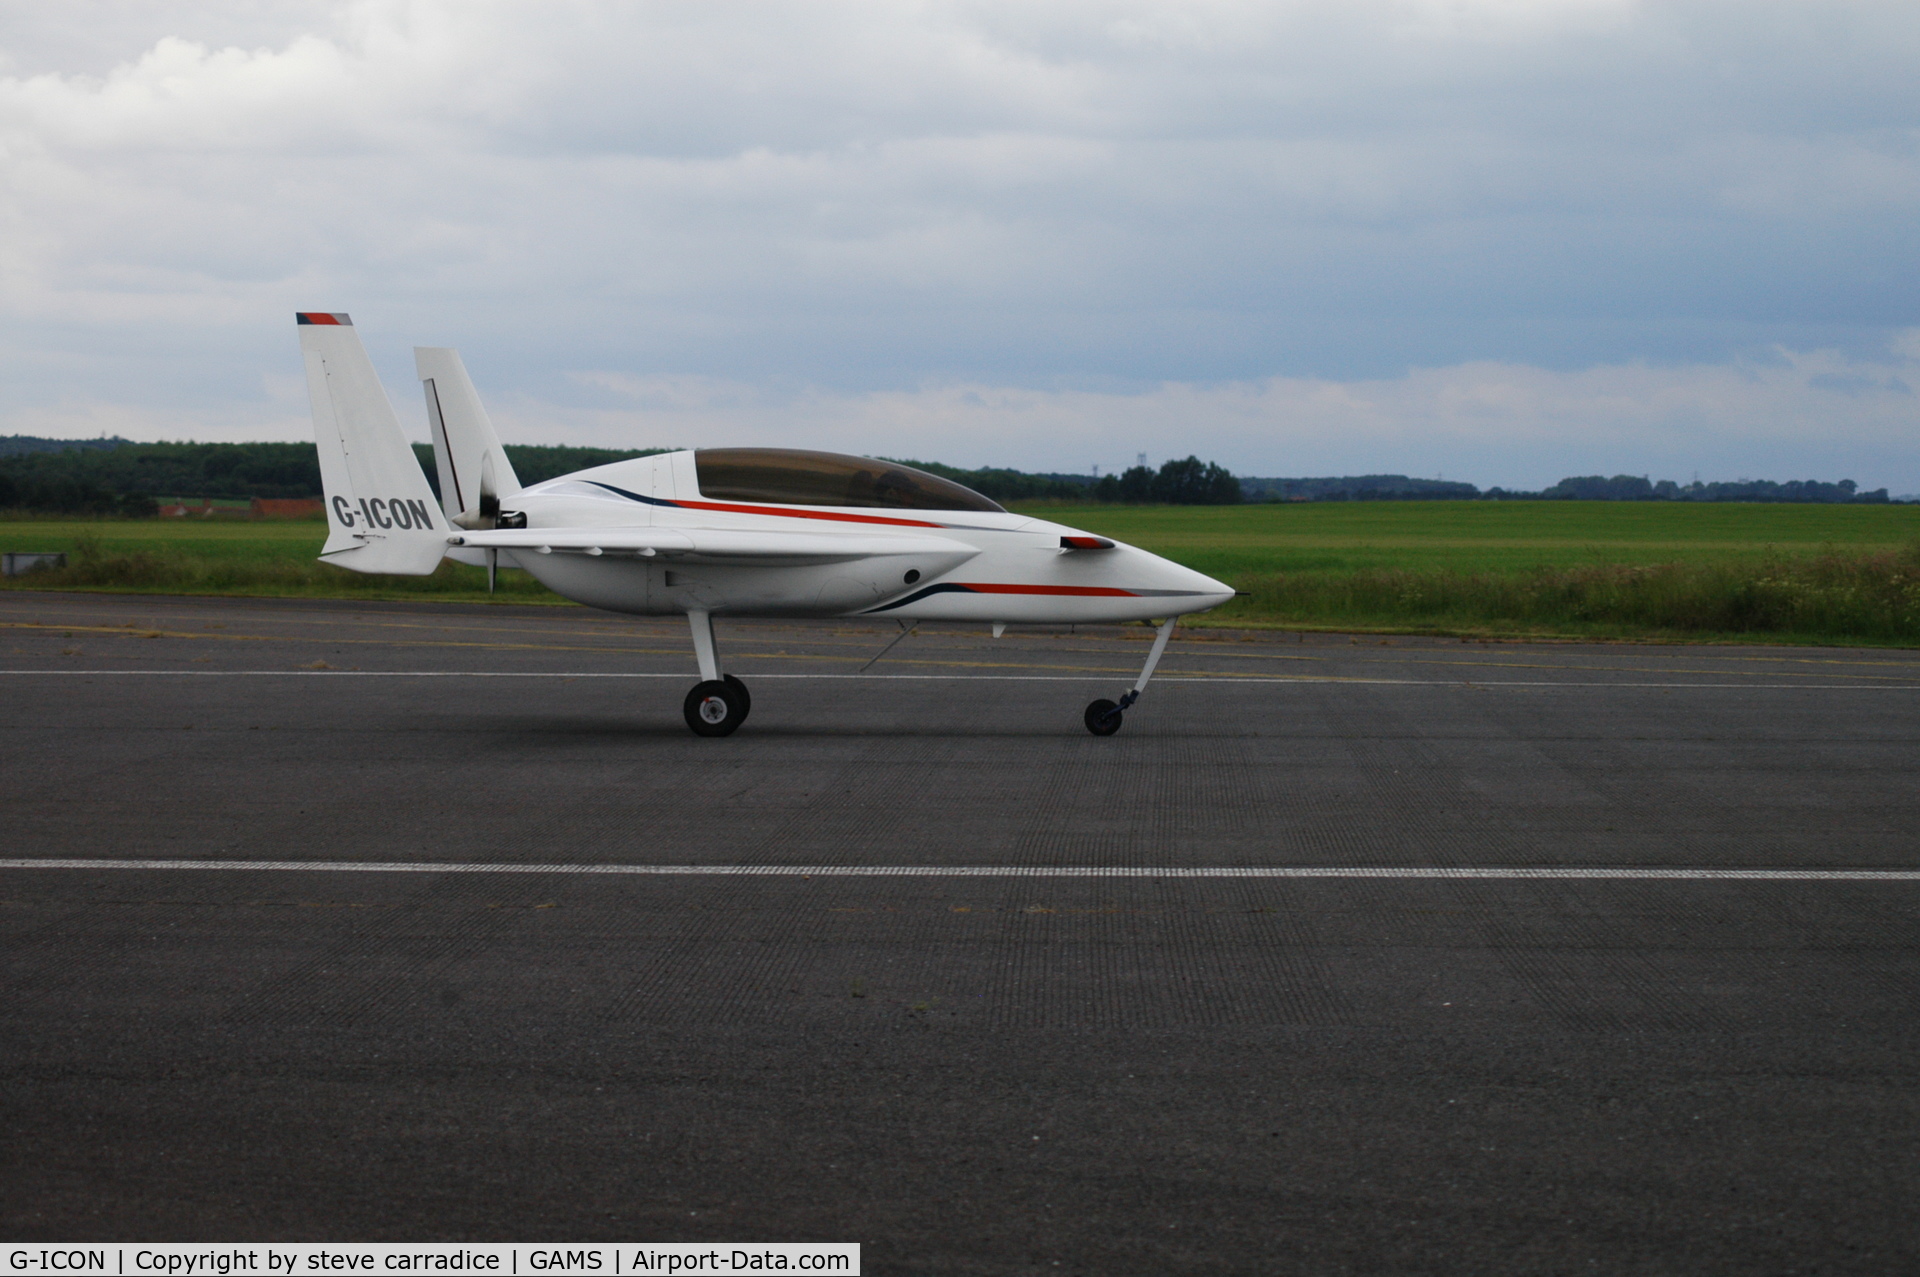 G-ICON, 2000 Rutan Long-EZ C/N PFA 074A-11104, post landing roll out